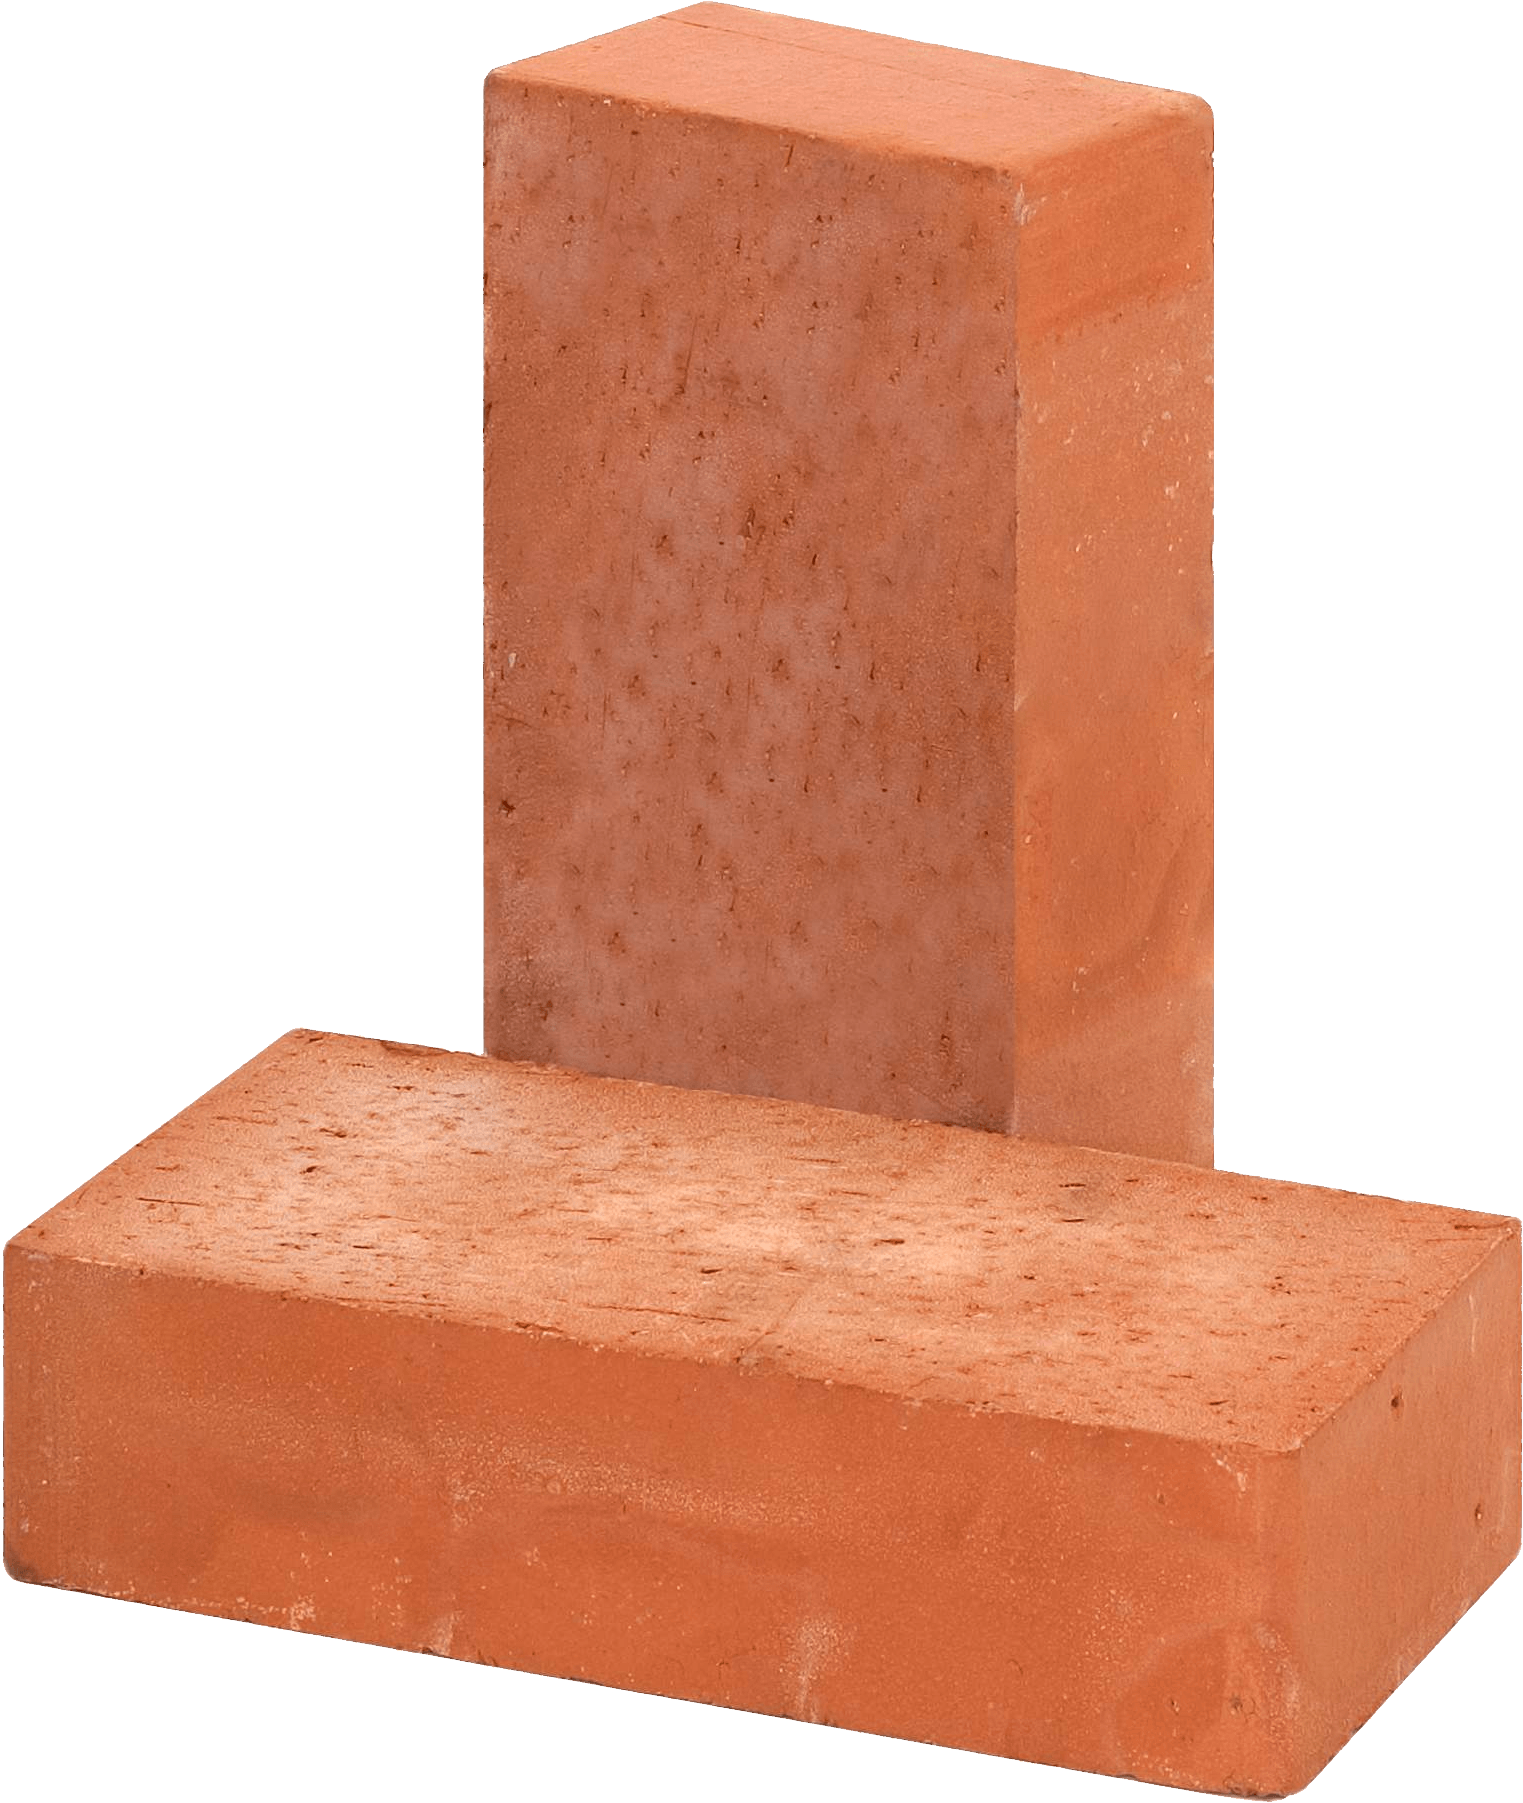 Tile Brick Download Free Image PNG Image